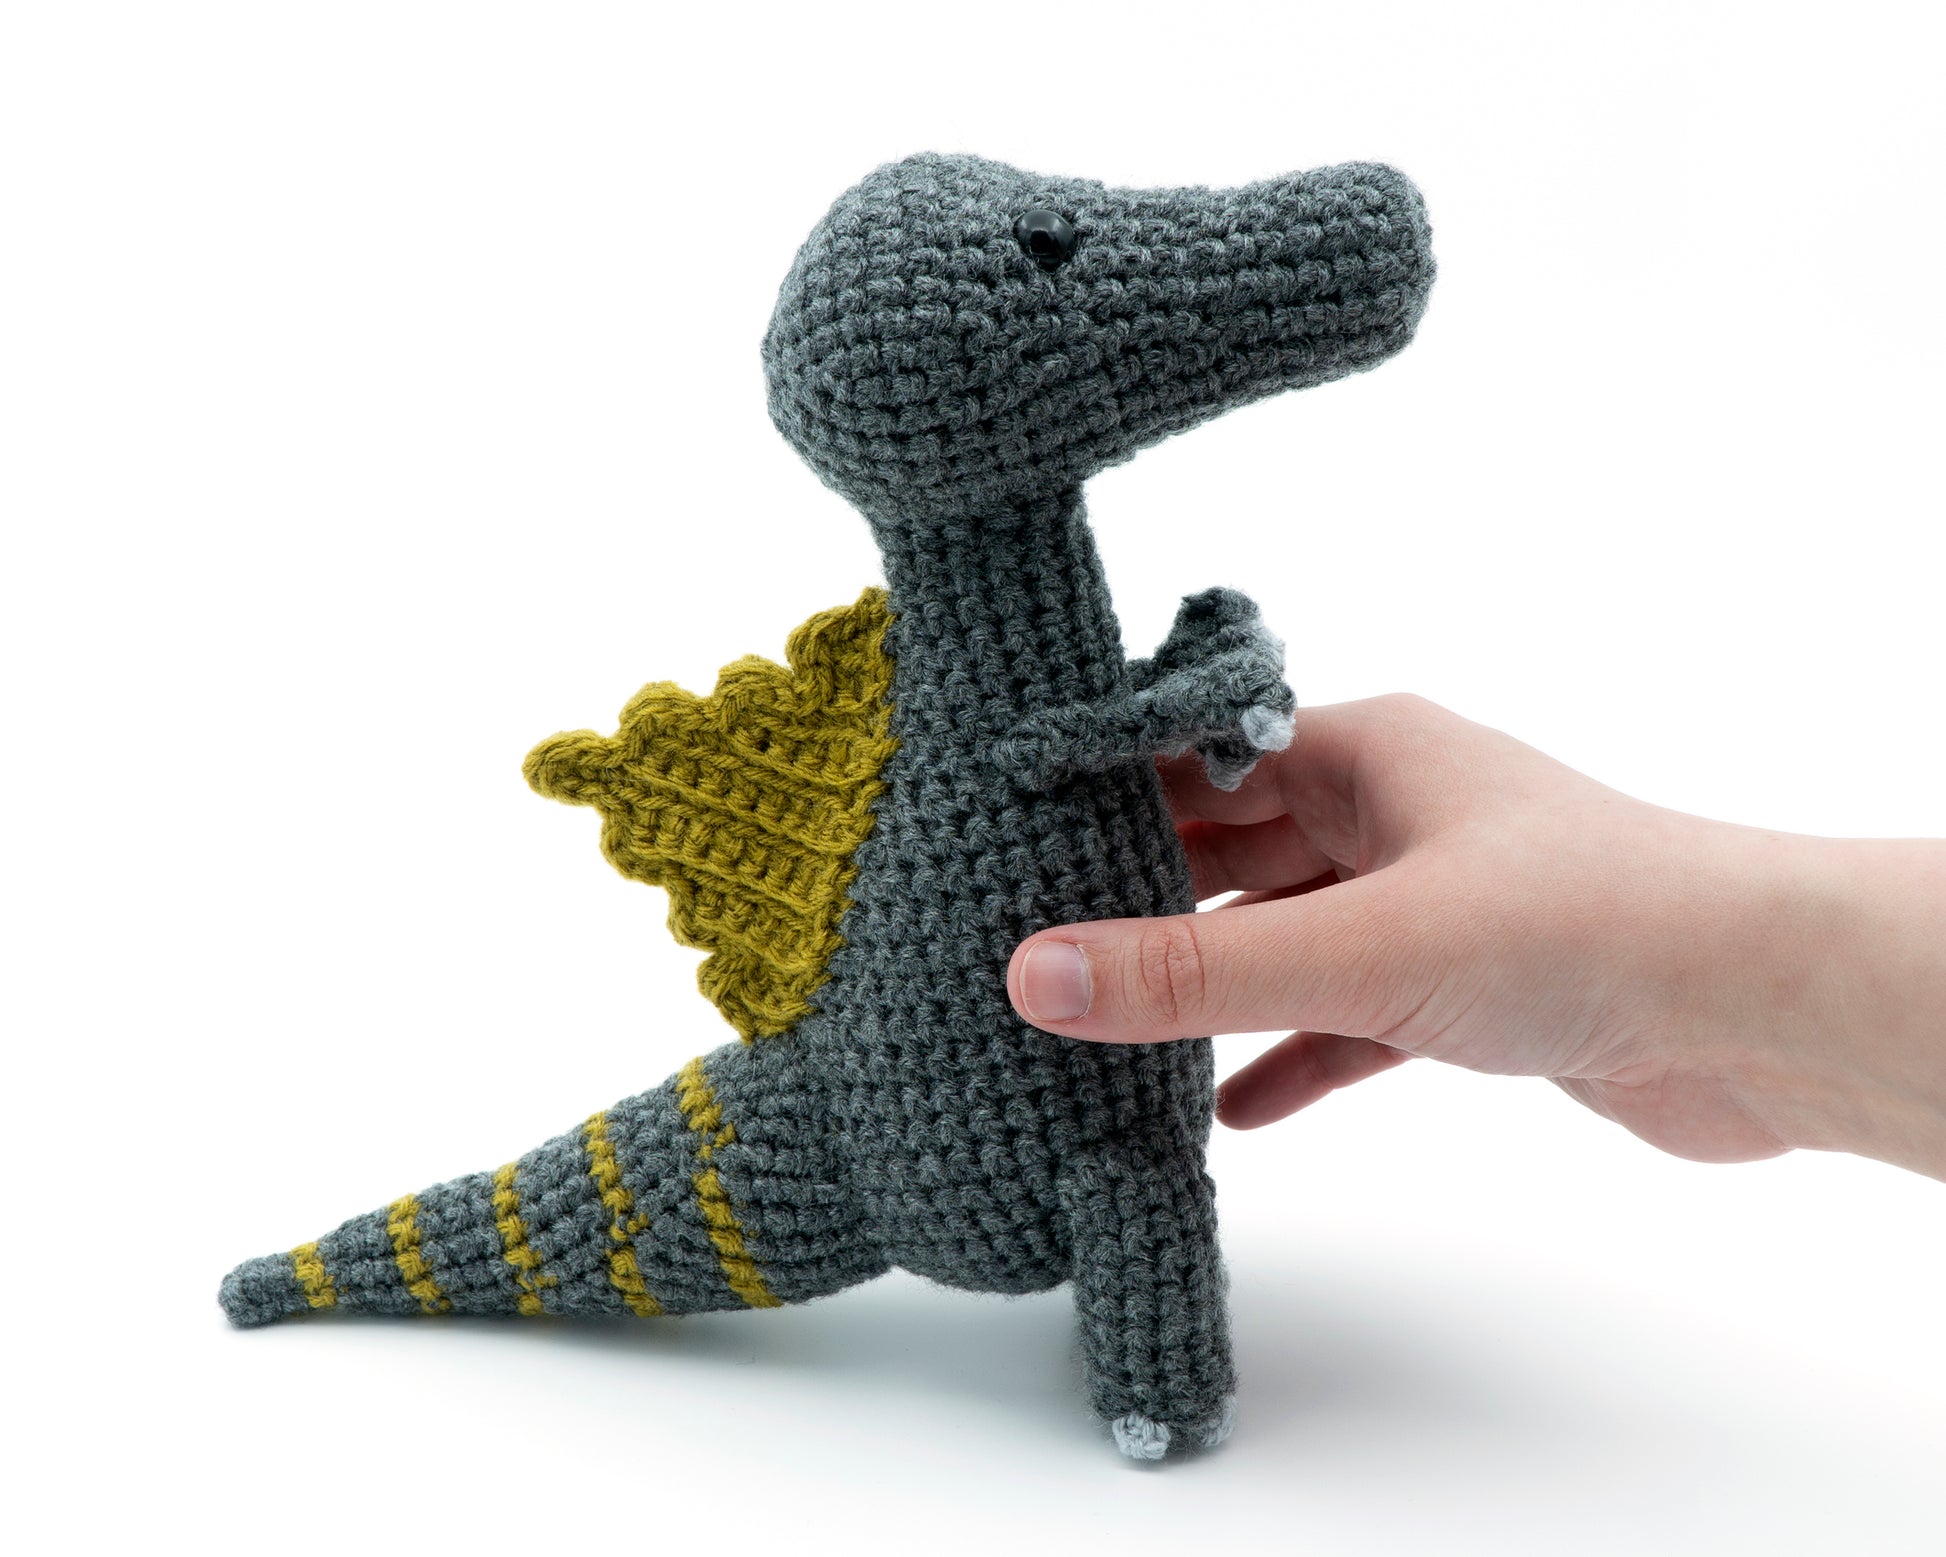 amigurumi crochet spinosaurus dinosaur pattern in hand for size comparison